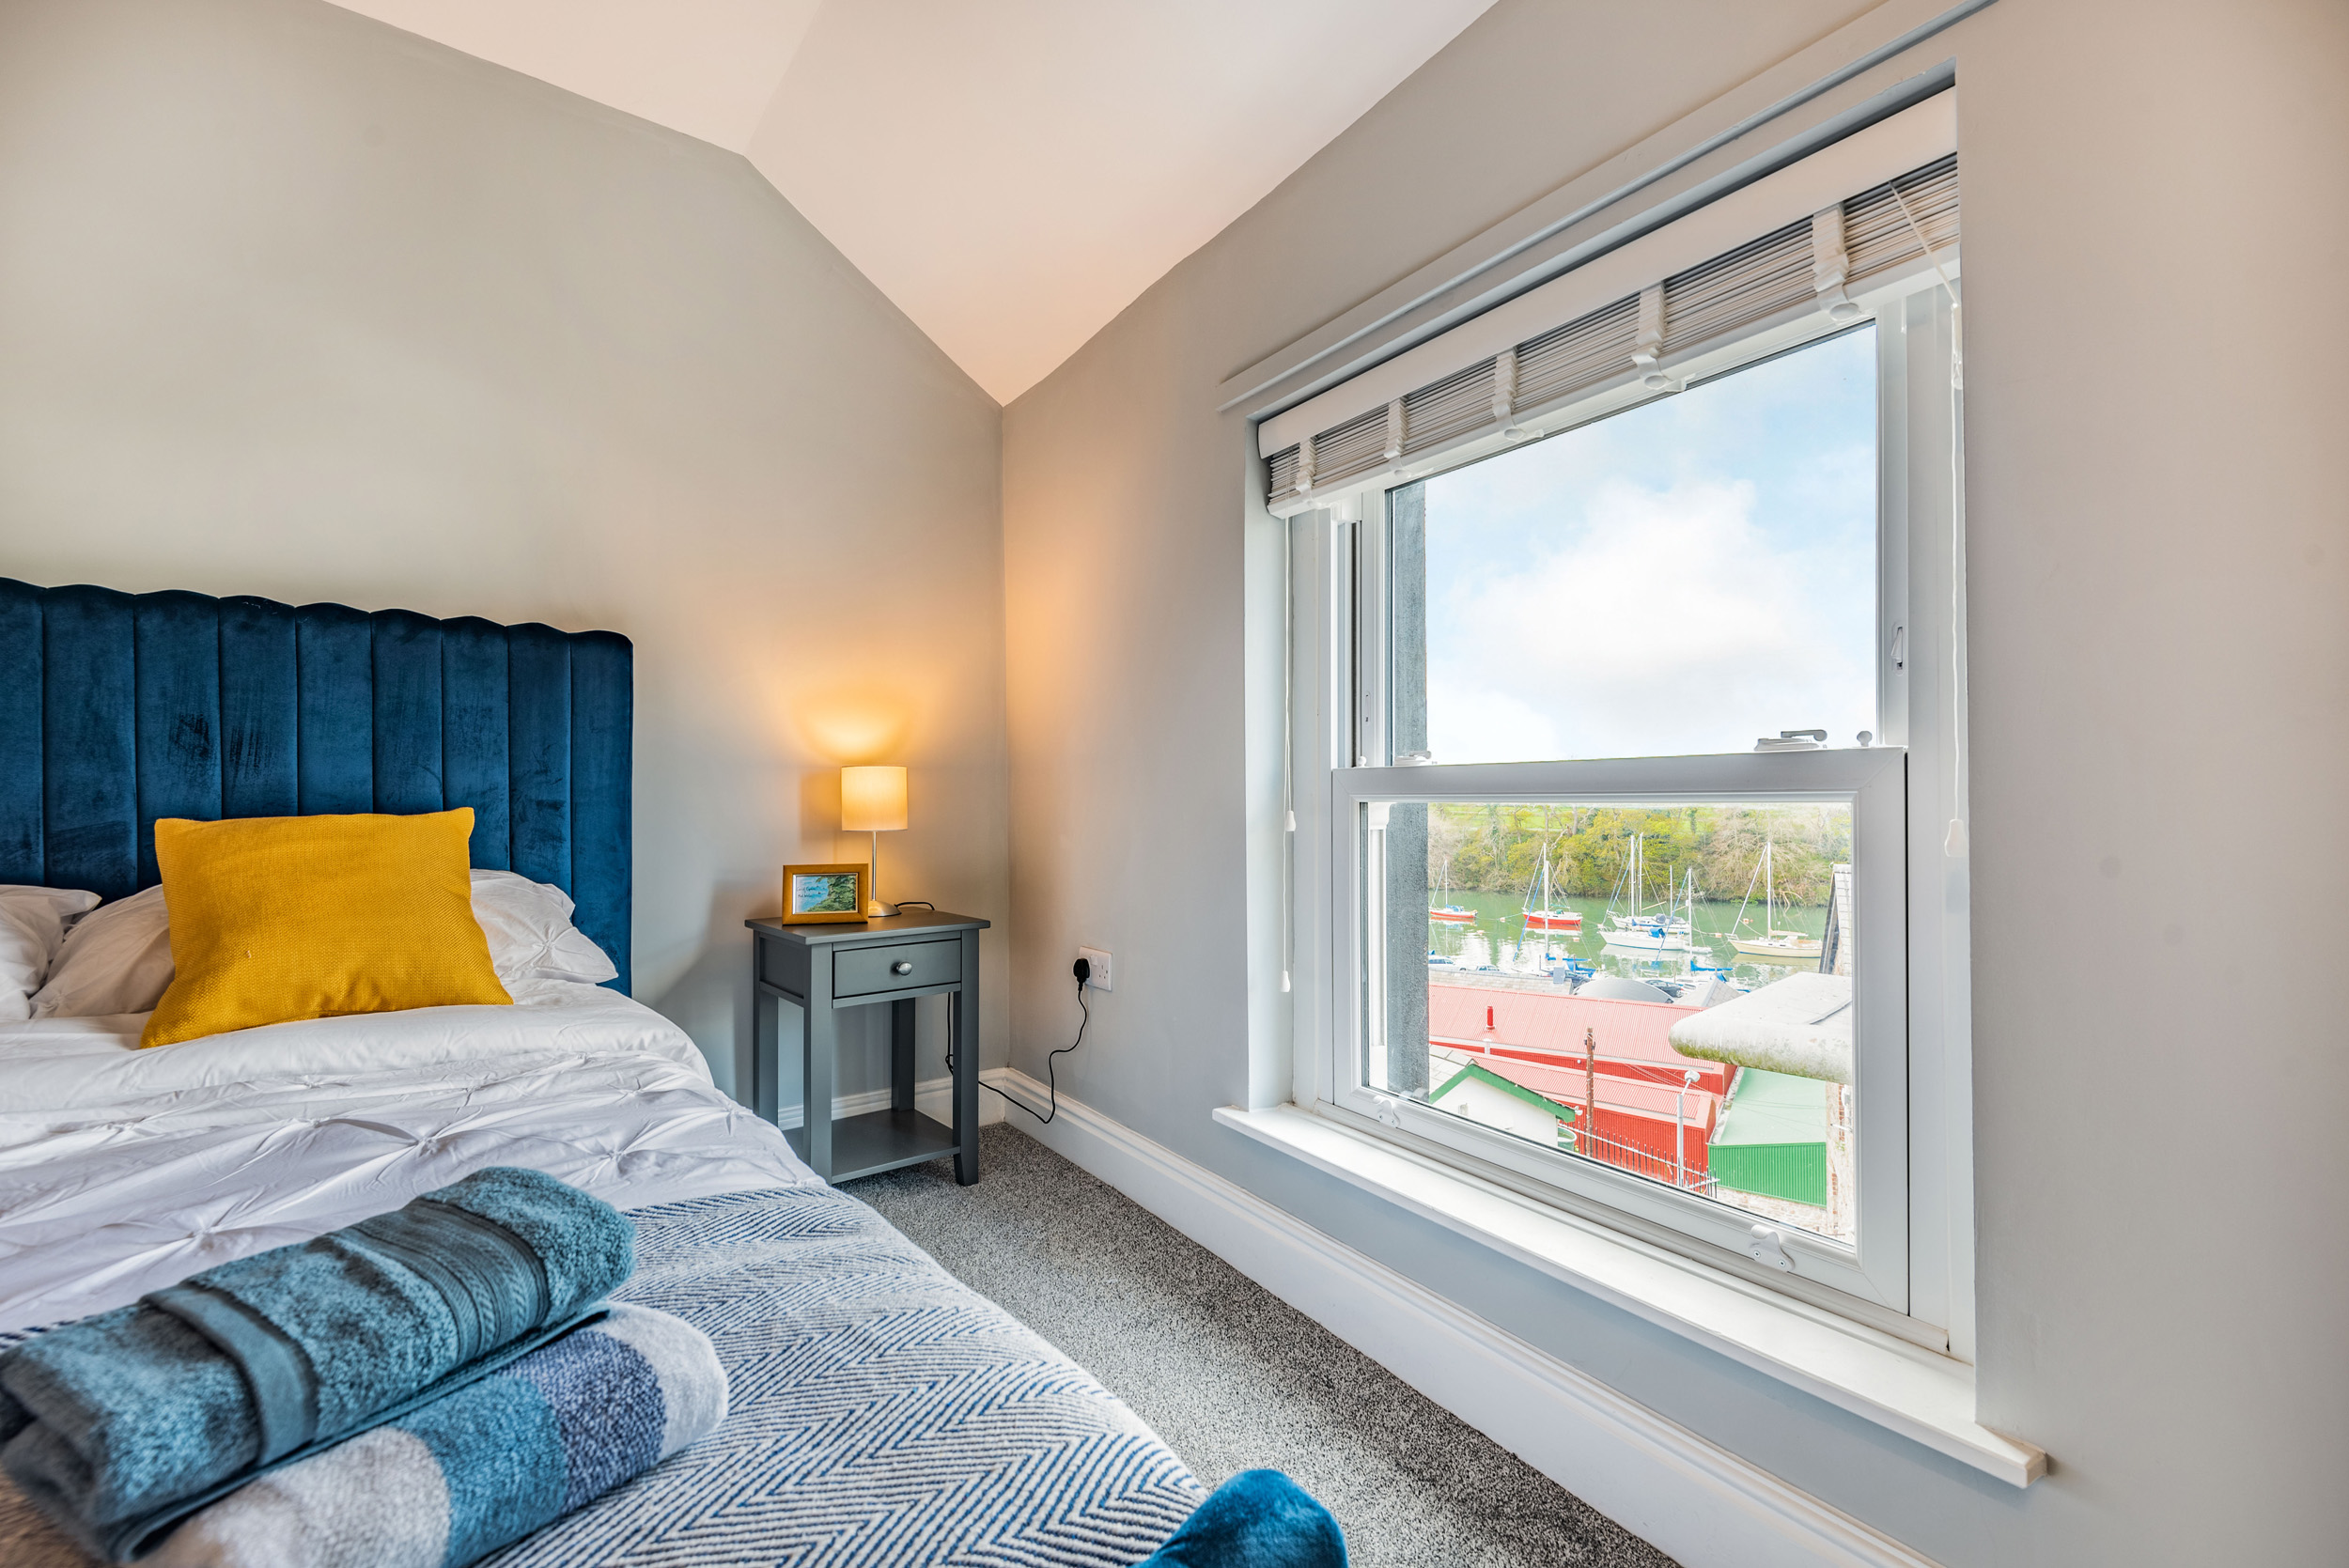 4 bedroom Cottage for rent in Caernarfon